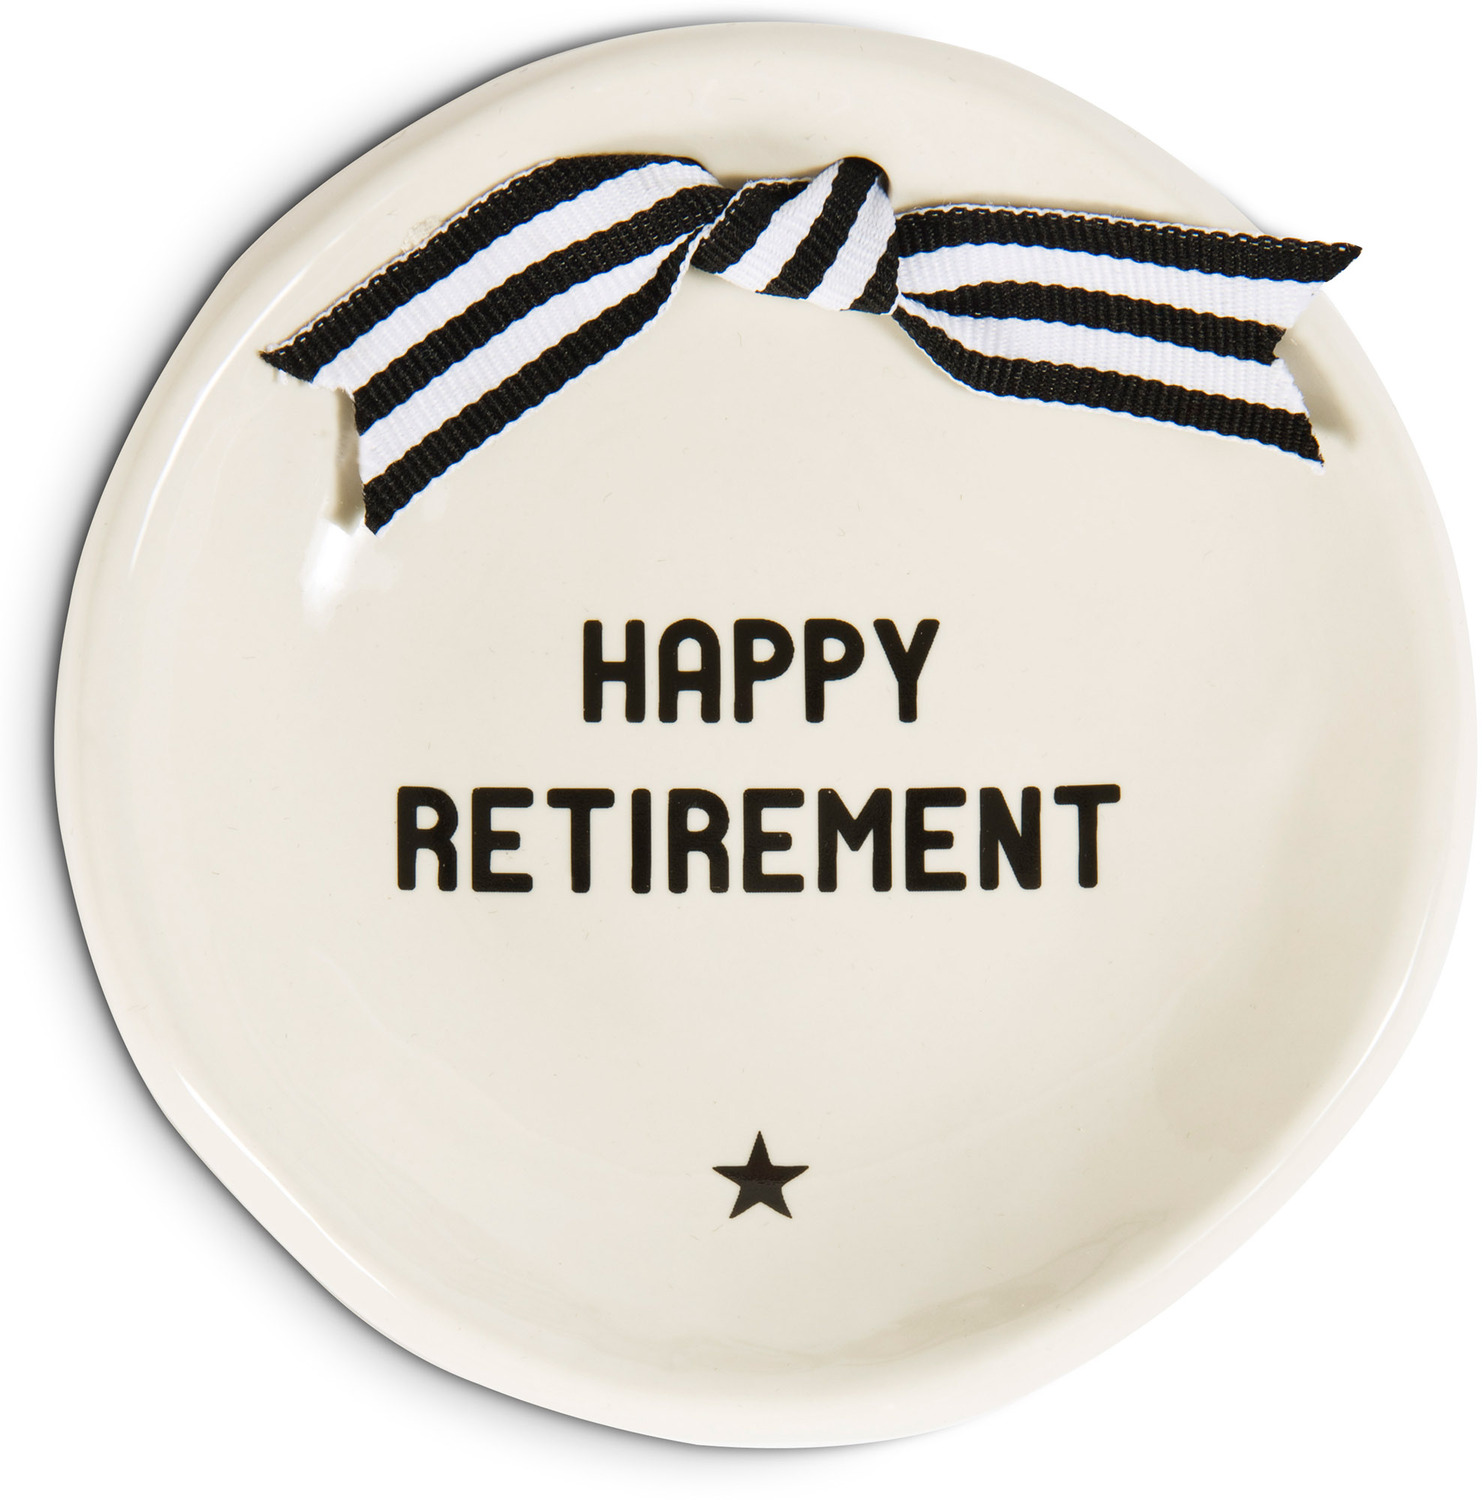 Retirement by The Milestone Collection - Retirement - 4.25" Diameter Round Keepsake Dish